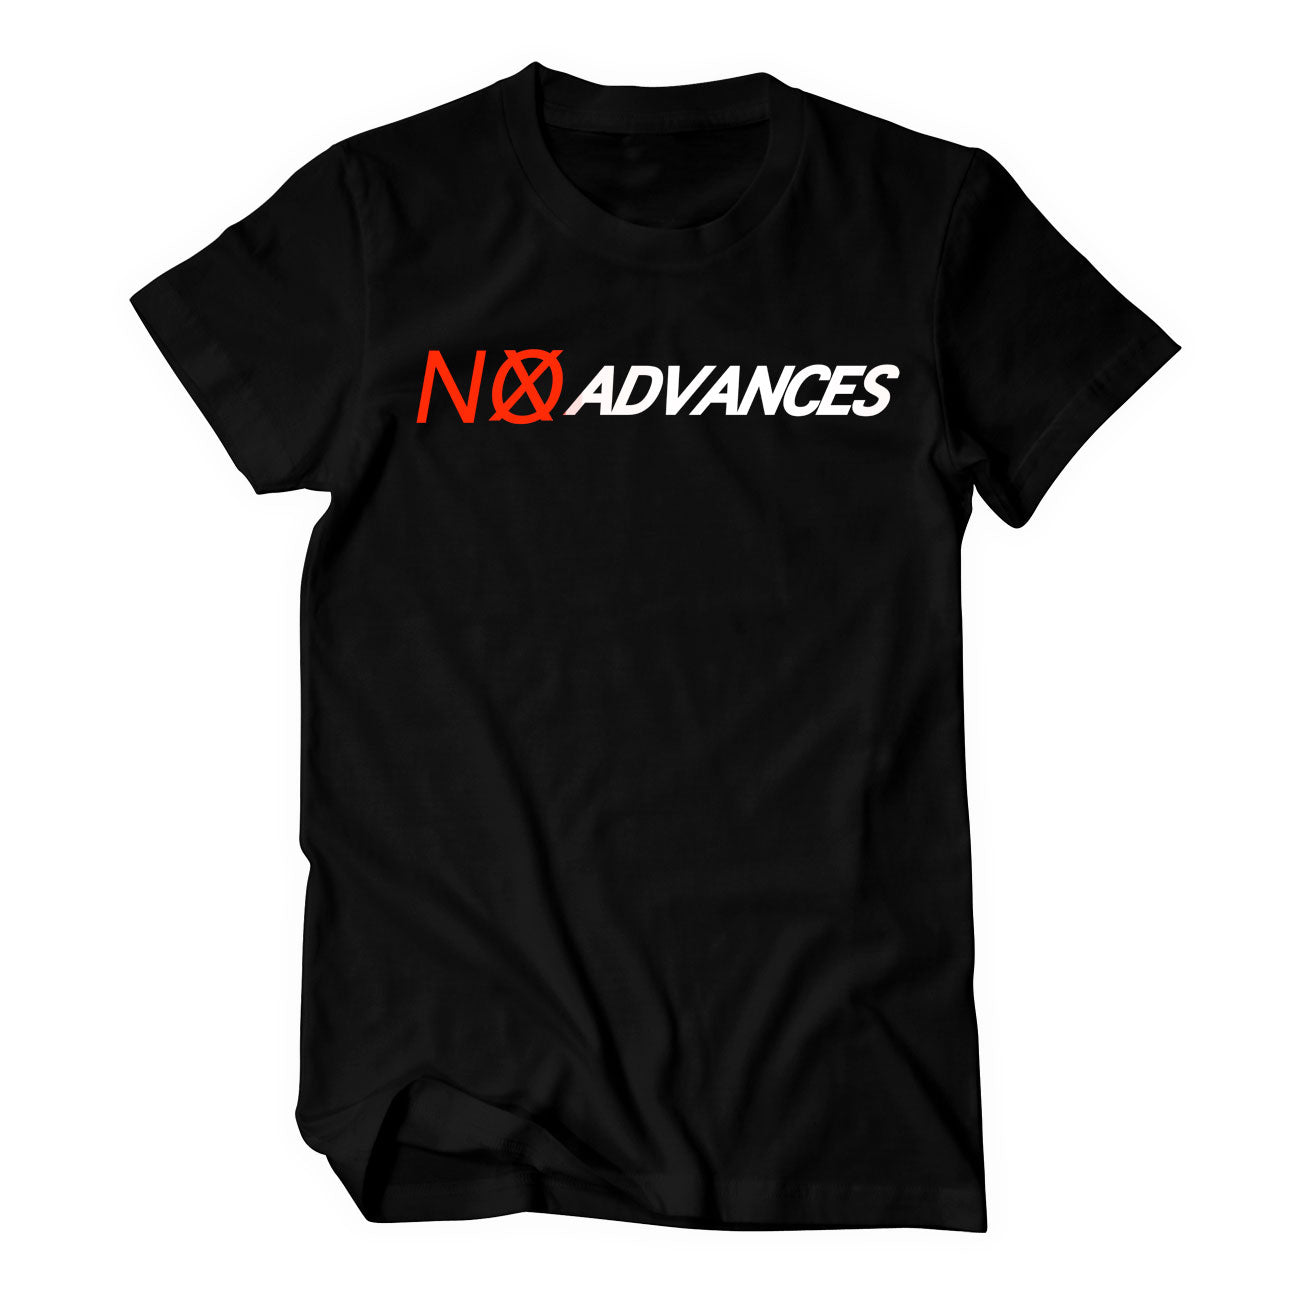 No Advances (Black)